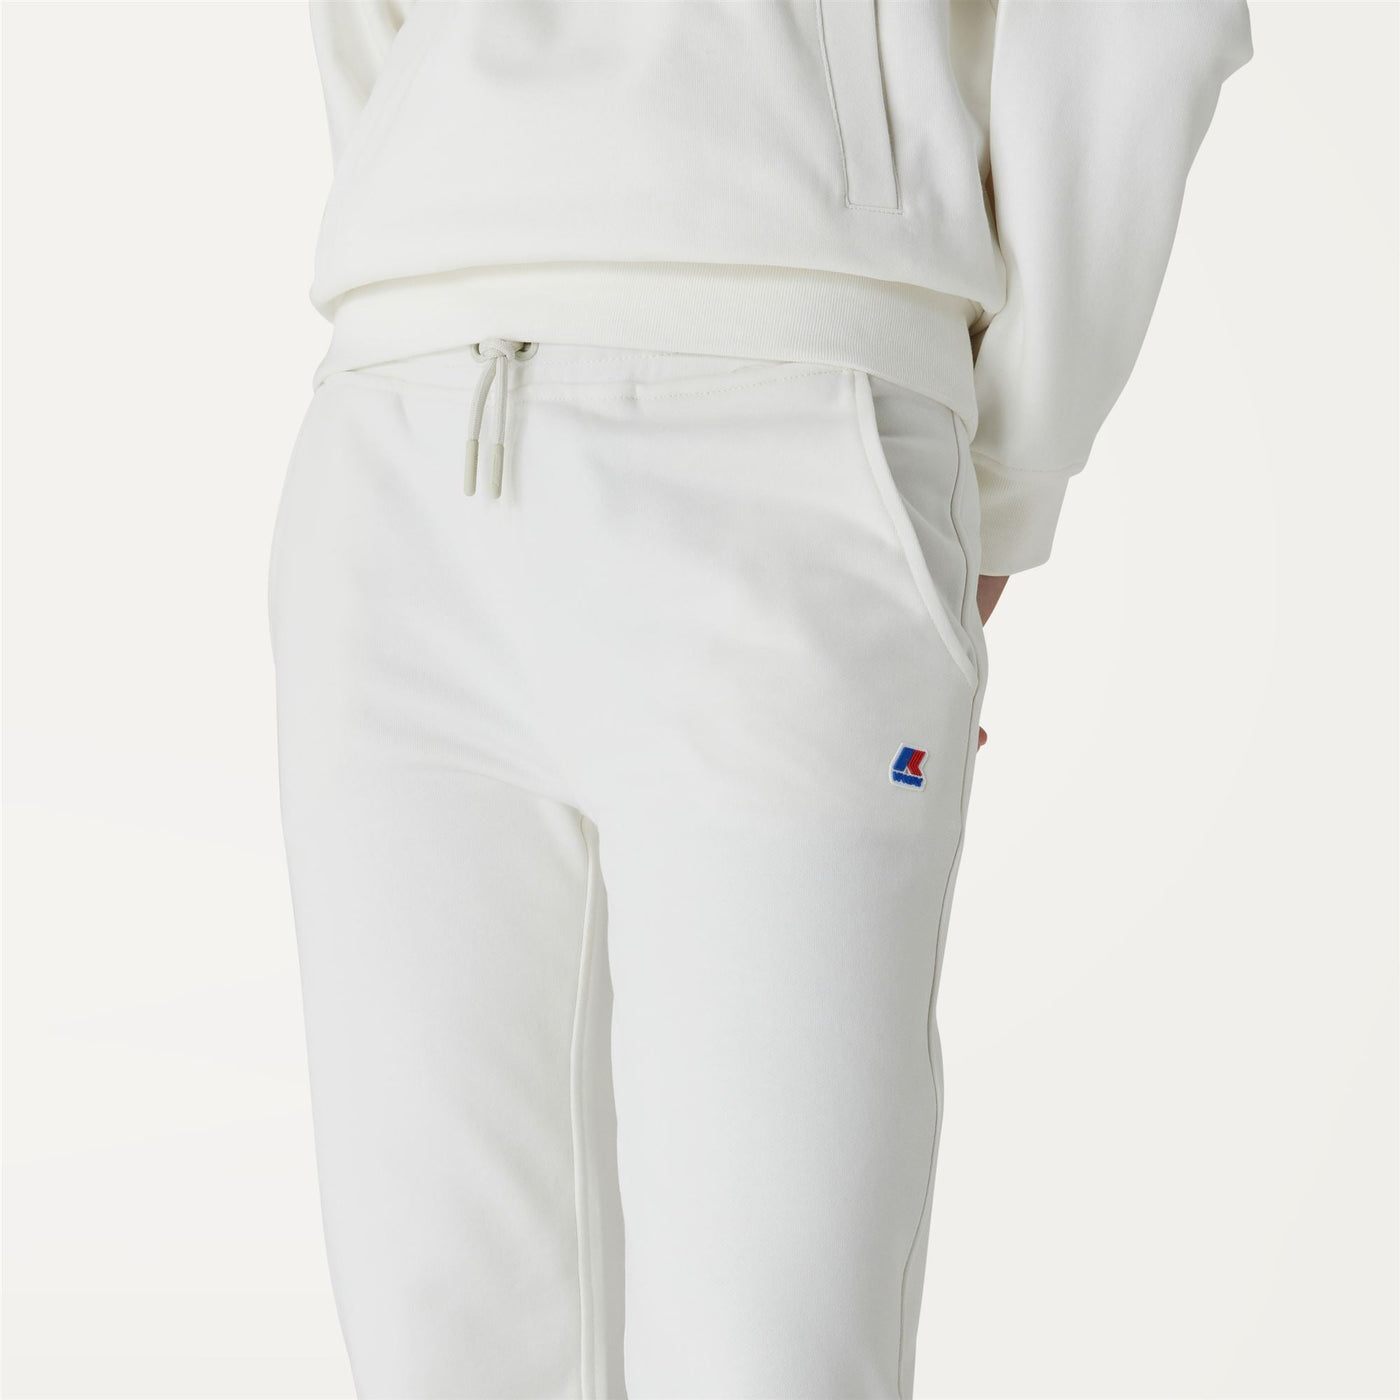 Pants Woman GINEVRA Sport Trousers White | K-Way Detail Double				